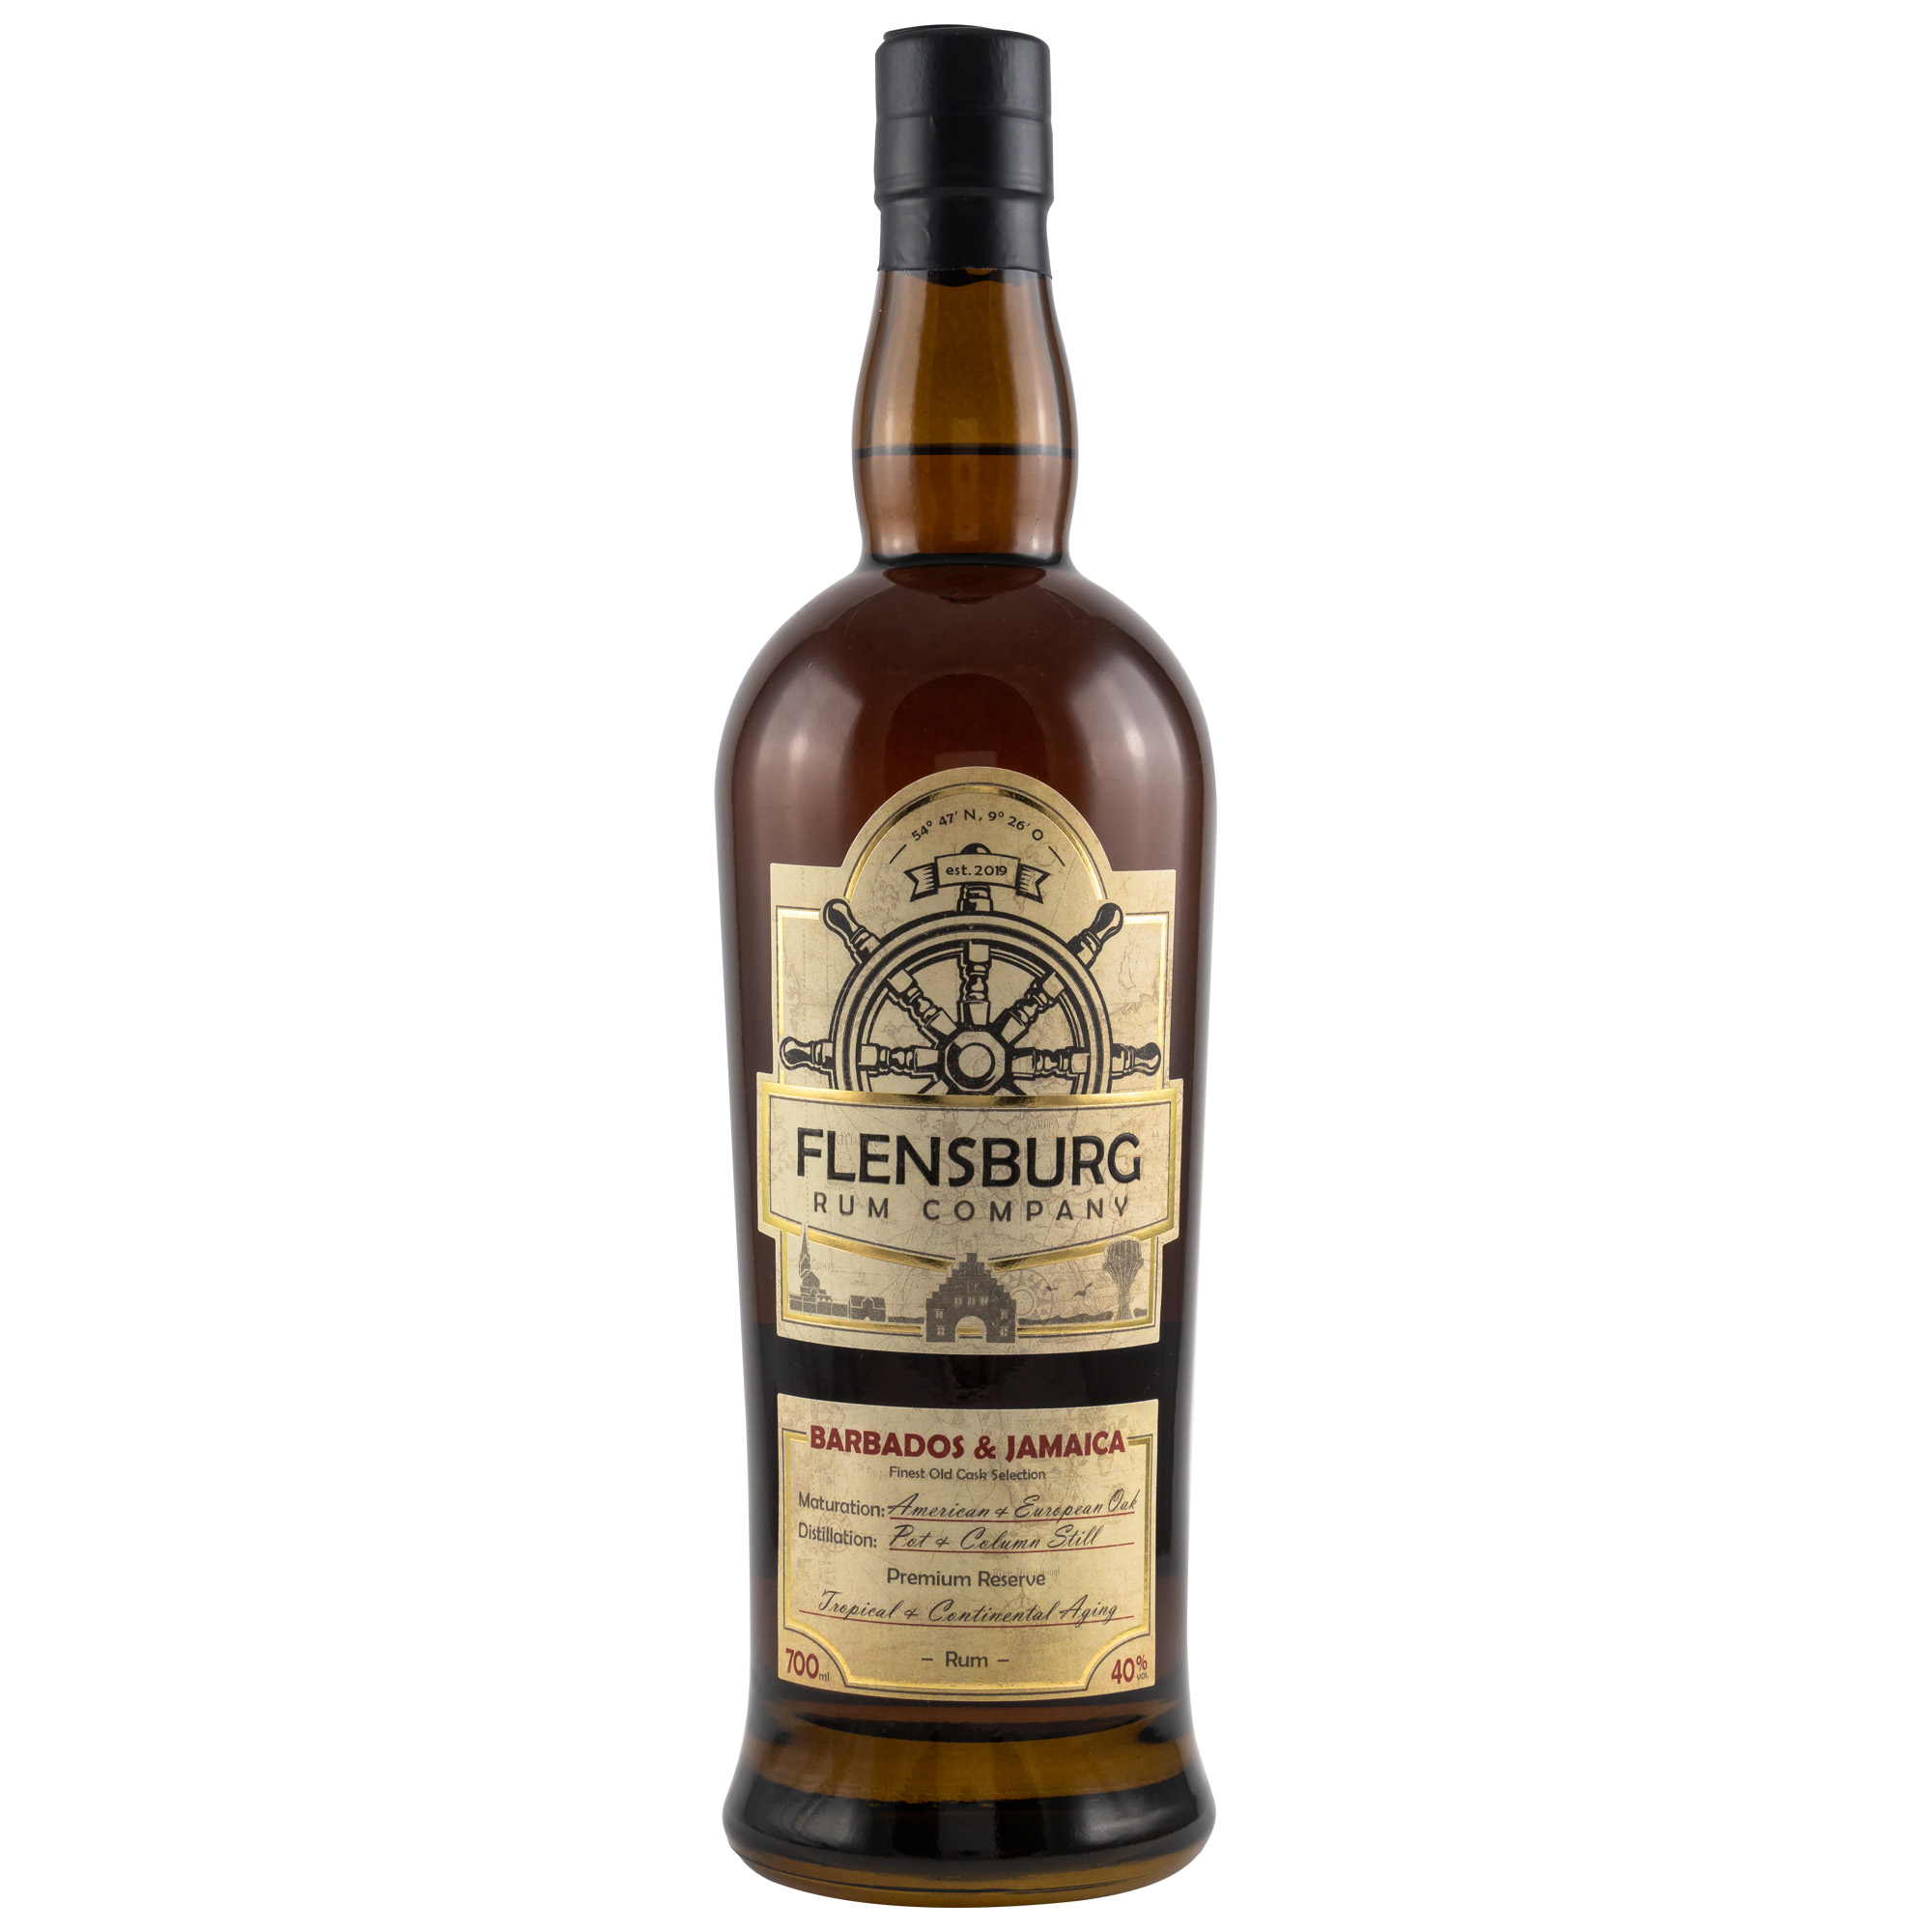 Barbados & Jamaica Flensburg Rum Company - Premium Reserve